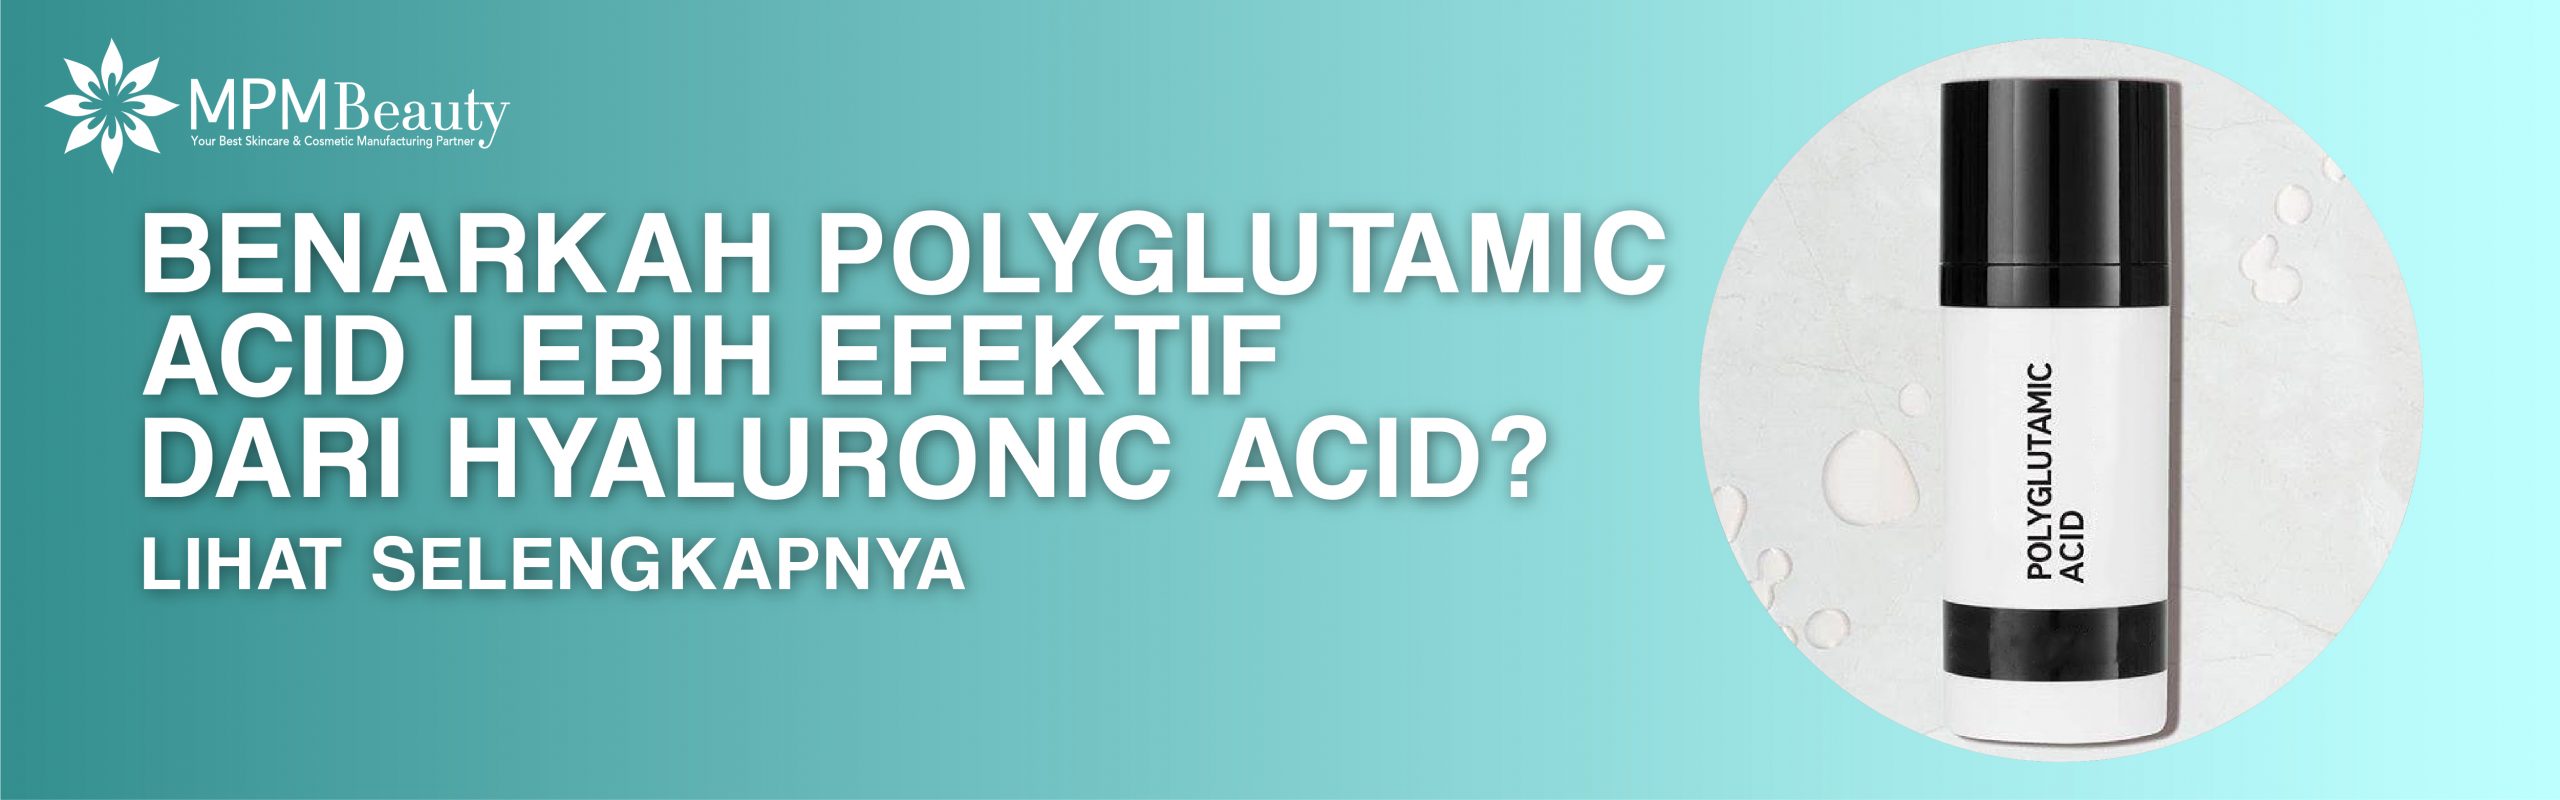 You are currently viewing Polyglutamic Acid lebih efektif dari Hyaluronic Acid?